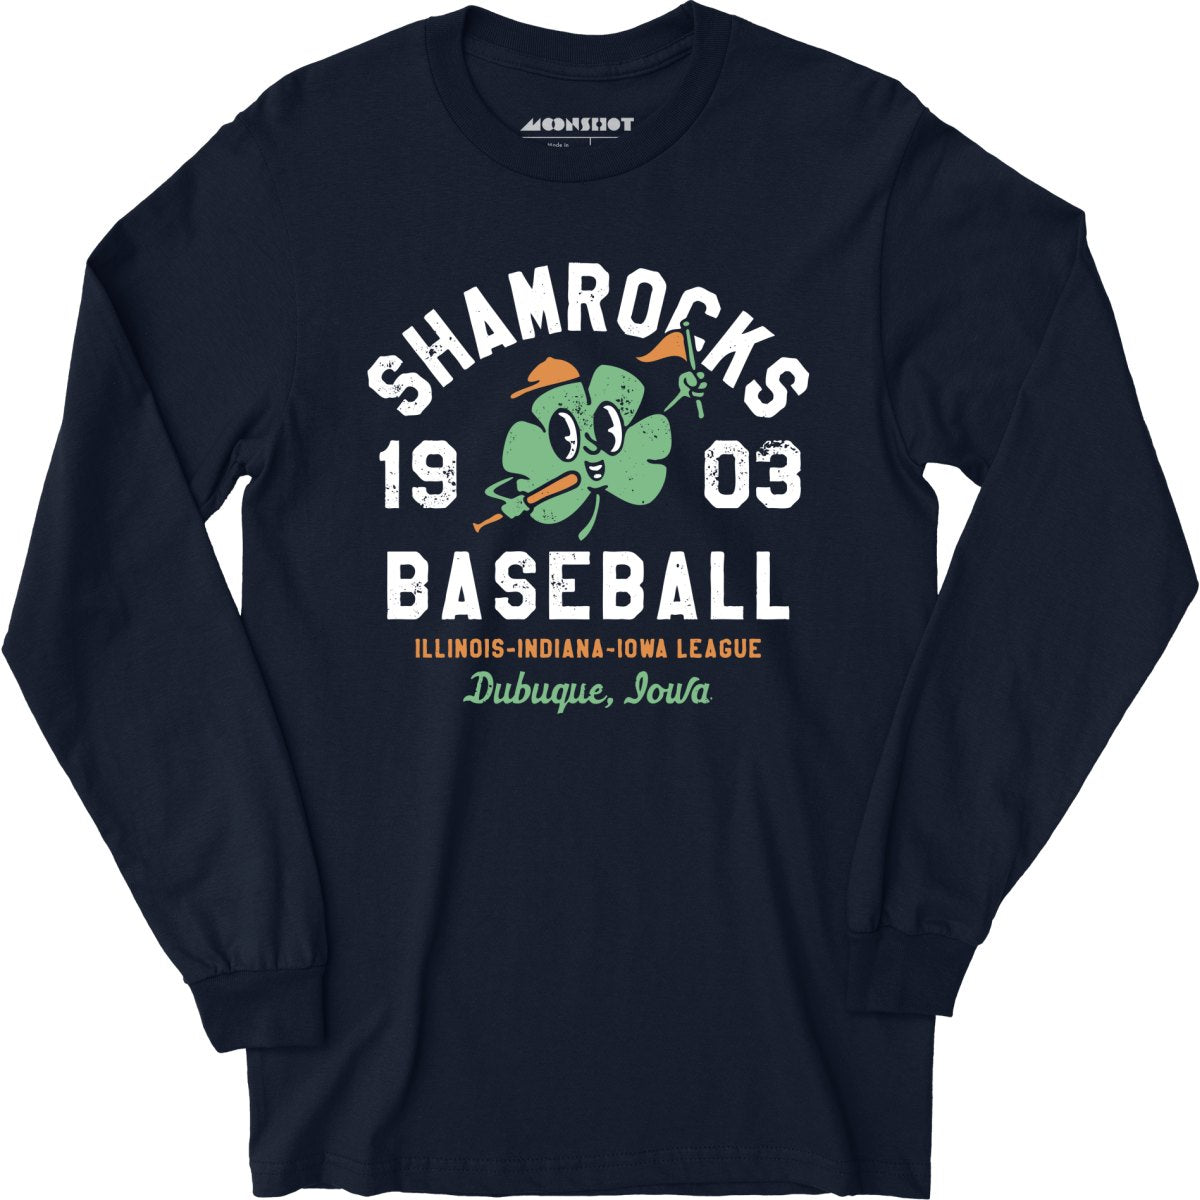 Dubuque Shamrocks - Iowa - Vintage Defunct Baseball Teams - Long Sleeve T-Shirt